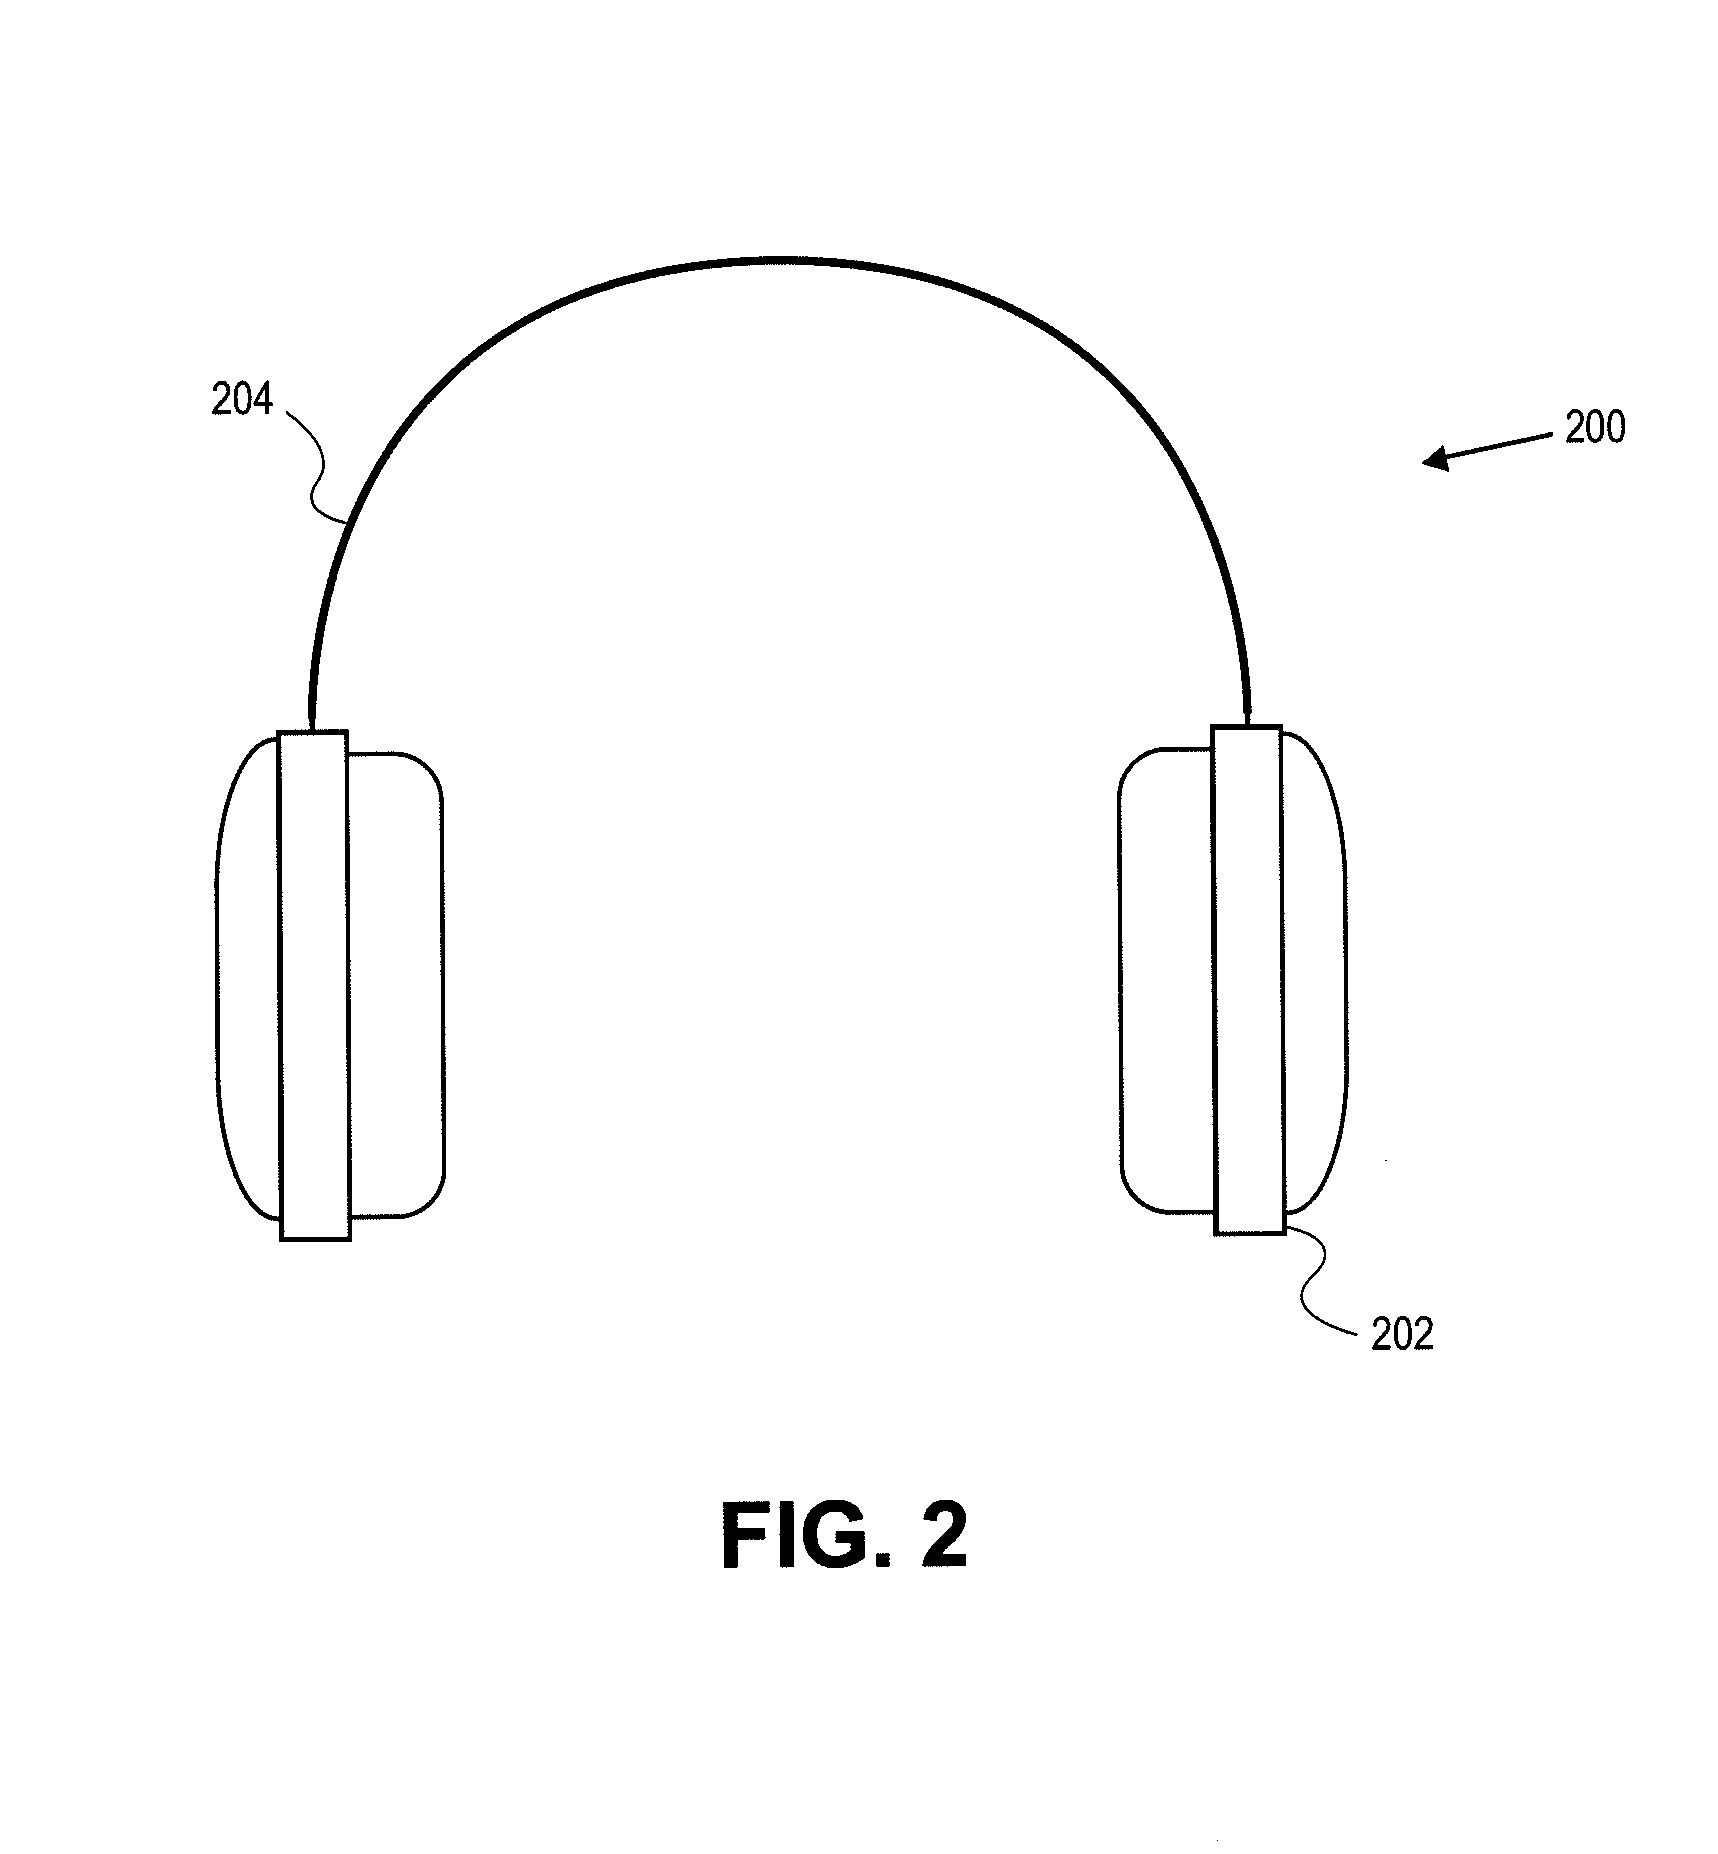 Audio input device